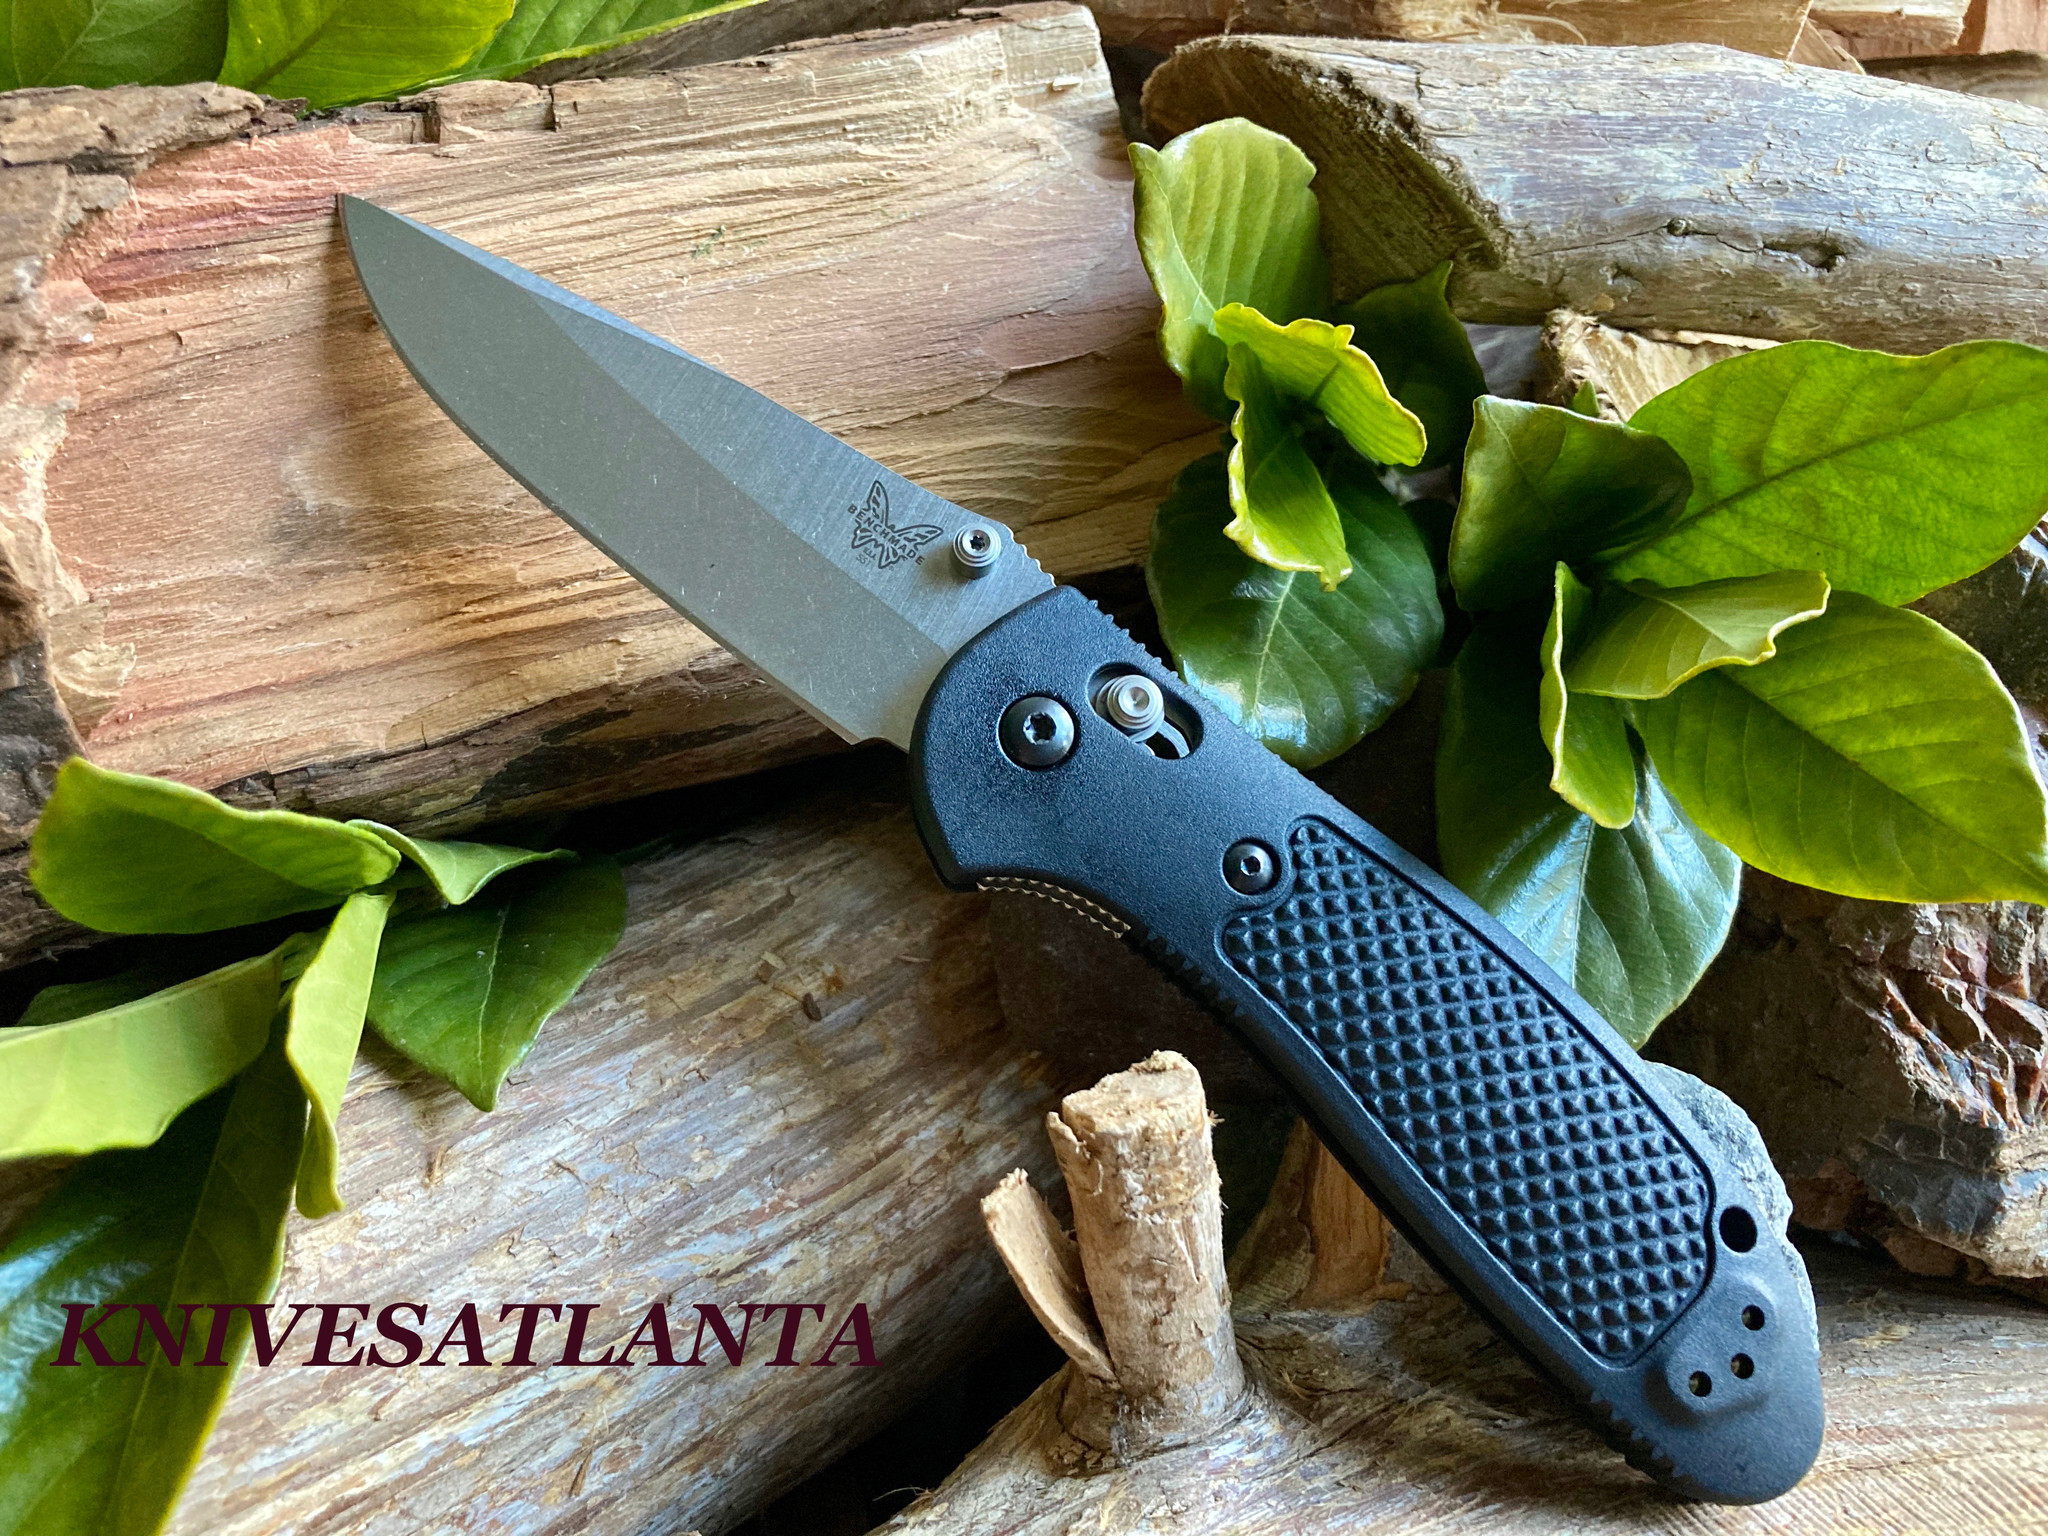 Benchmade 551 Griptilian Folding Knife - Best Price